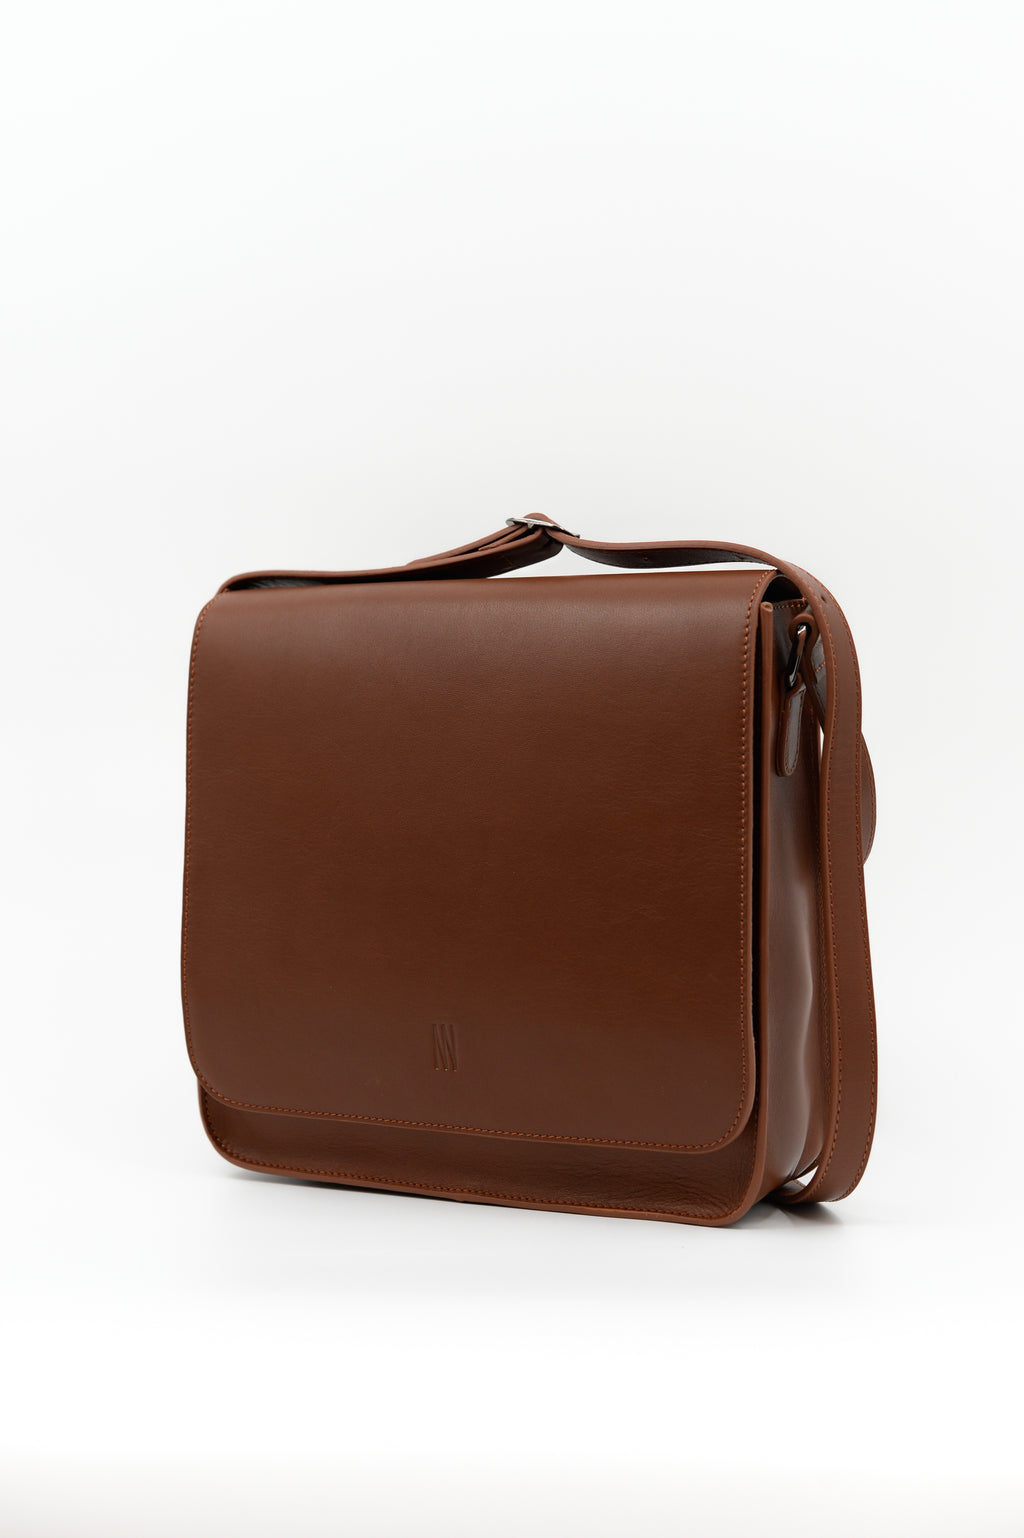 Medium crossbody handbag in cognac nappa leather